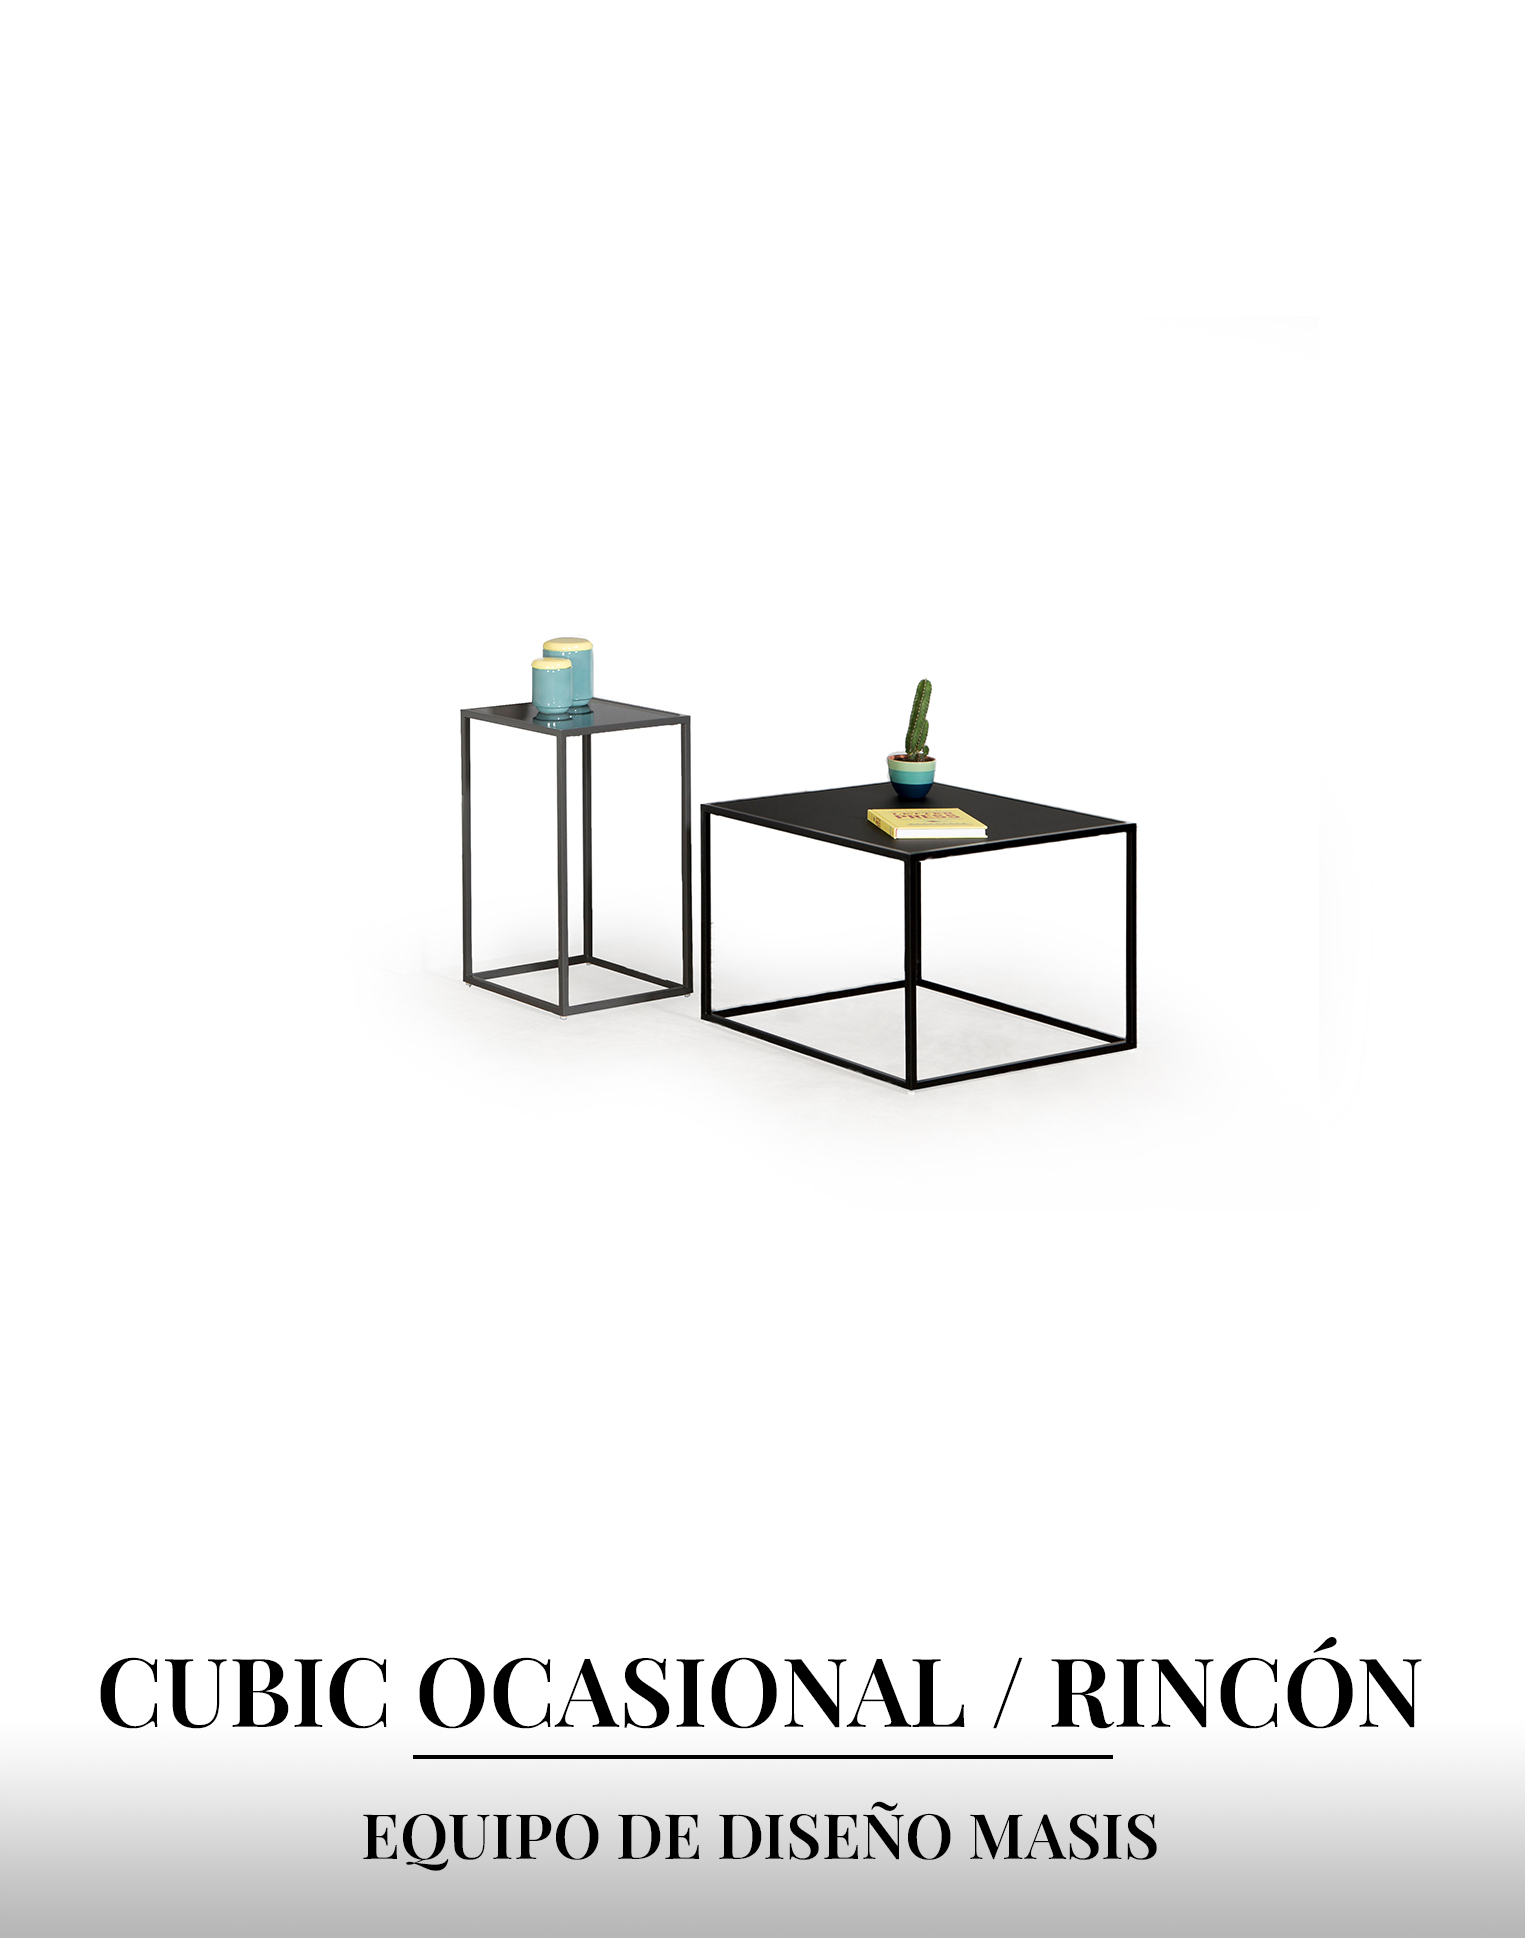 Cubic Ocasional / Rincon